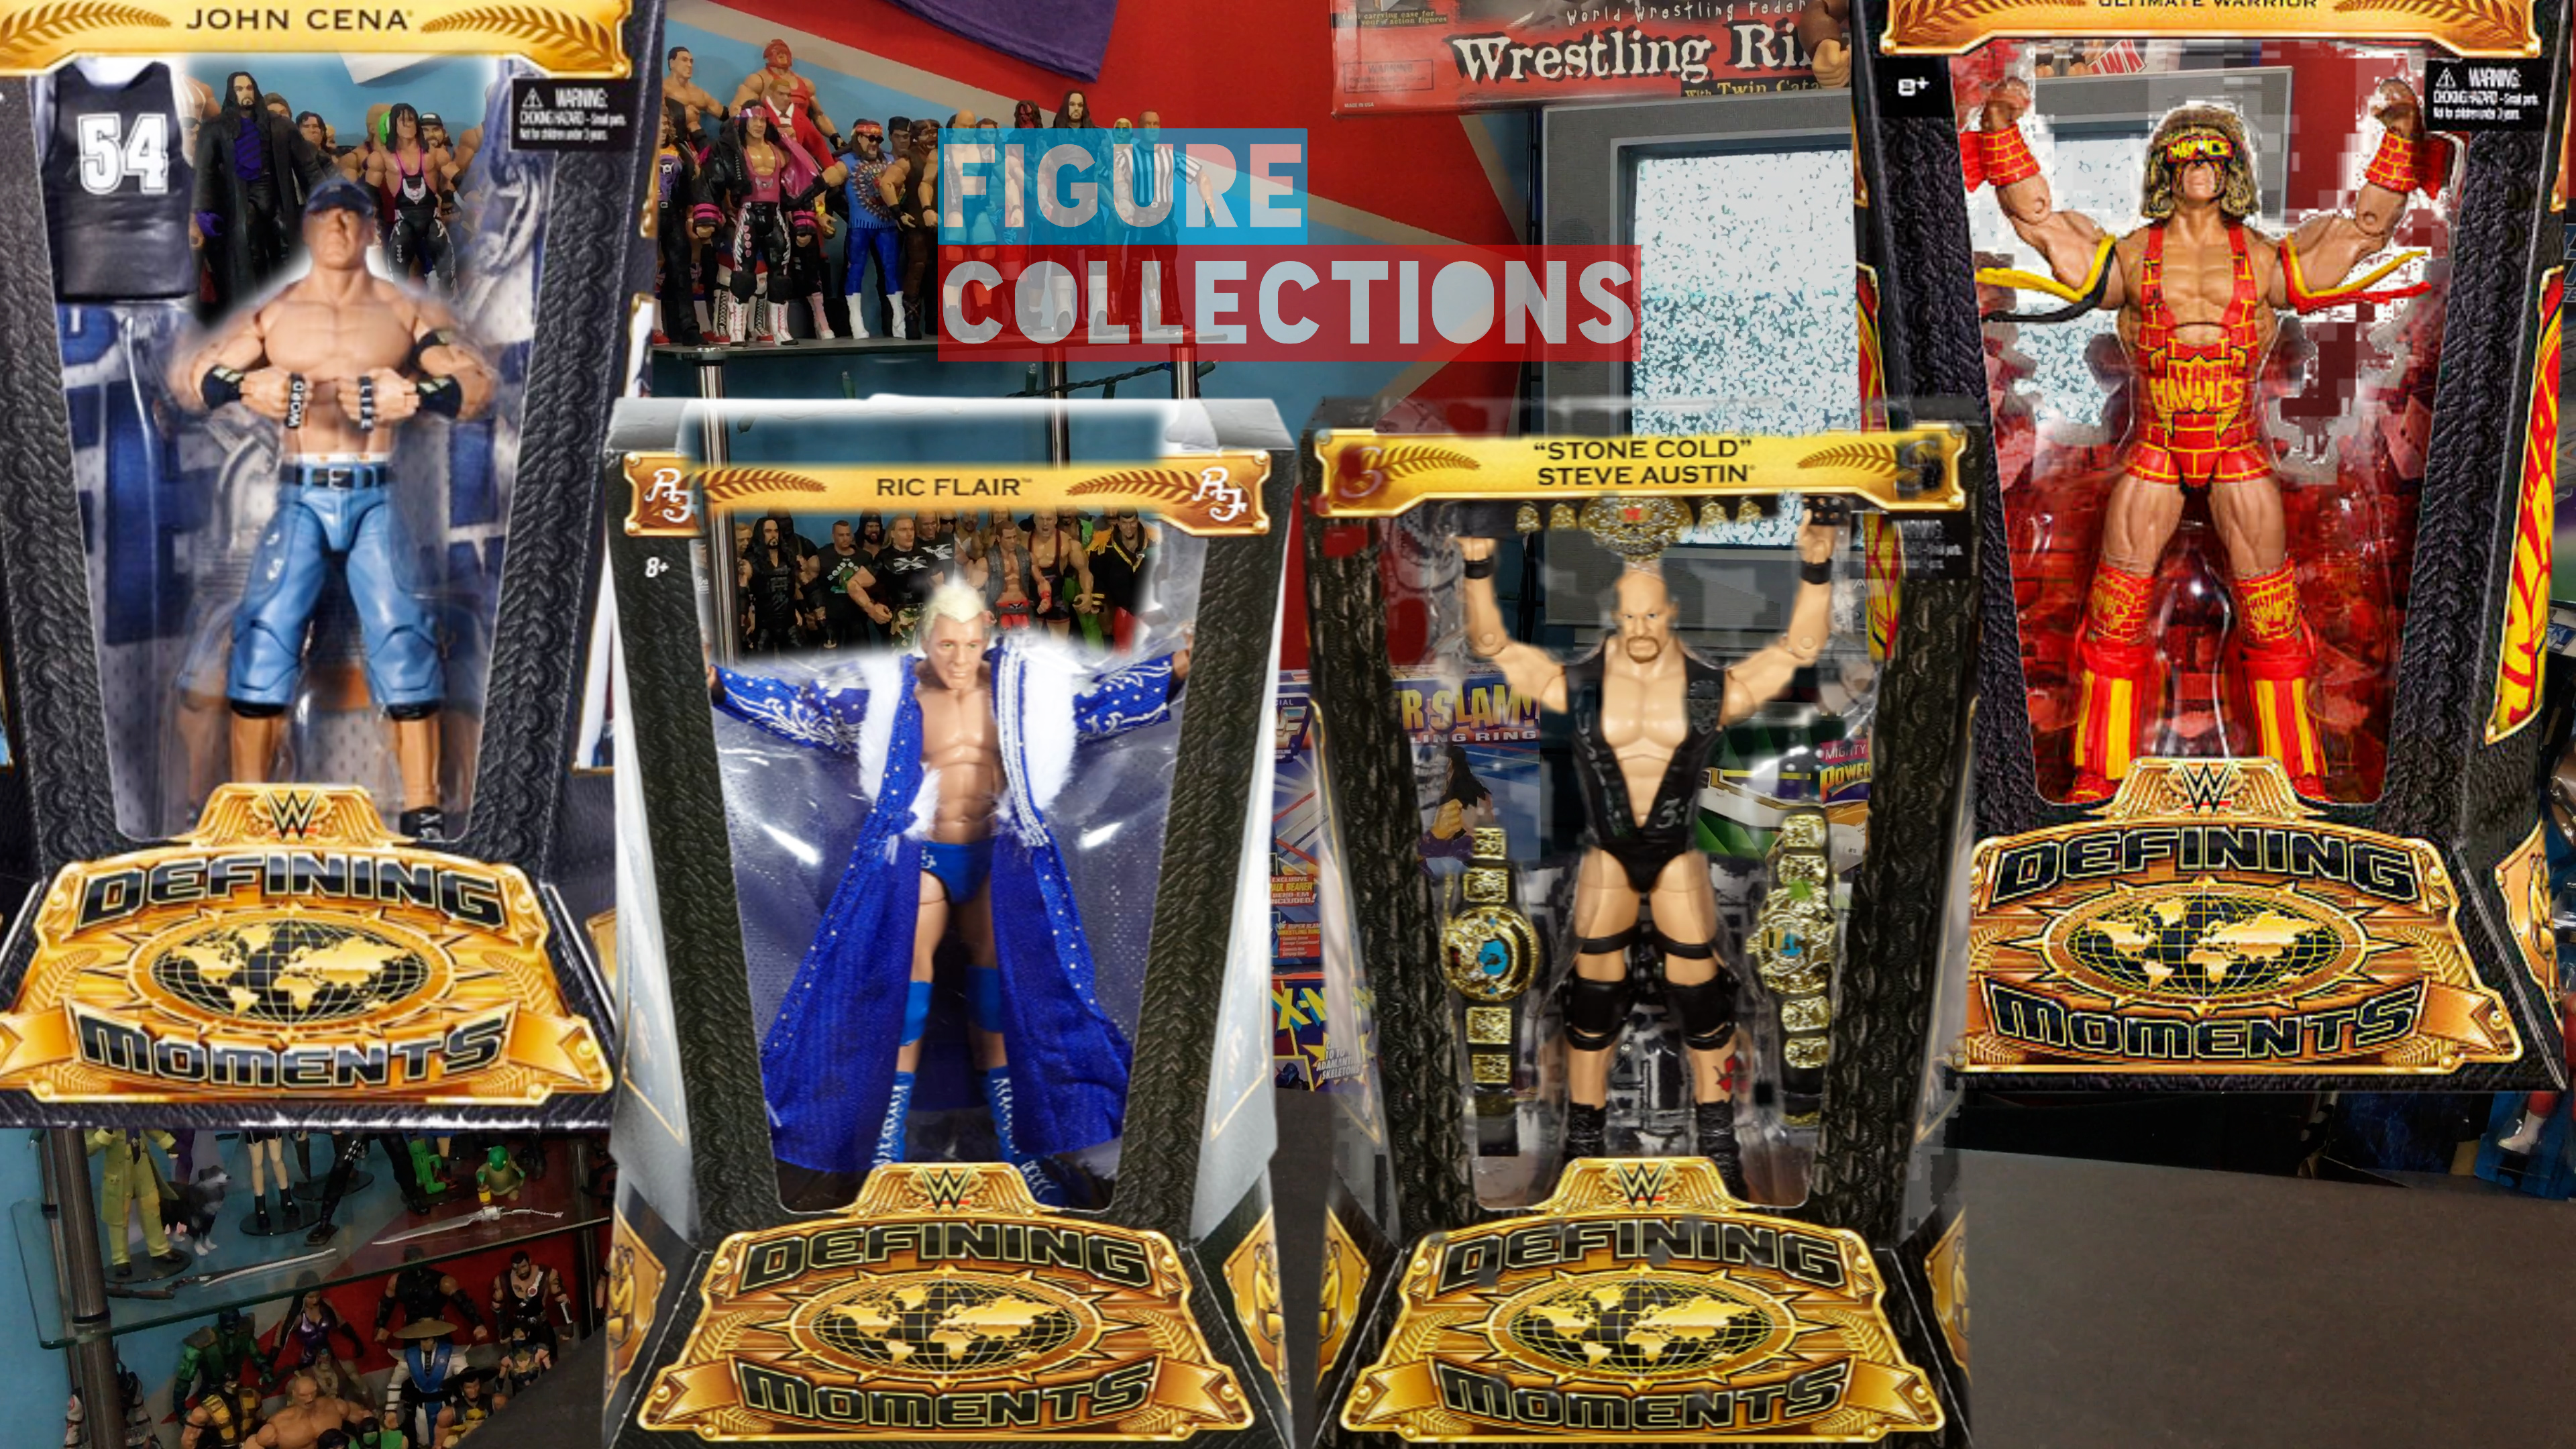 WWE Wrestling Mattel Elite Legends Defining Moments Series 8 Stone Cold Steve Austin Ric Flair Ultimate Warrior John Cena Figures Set Picture Checklist